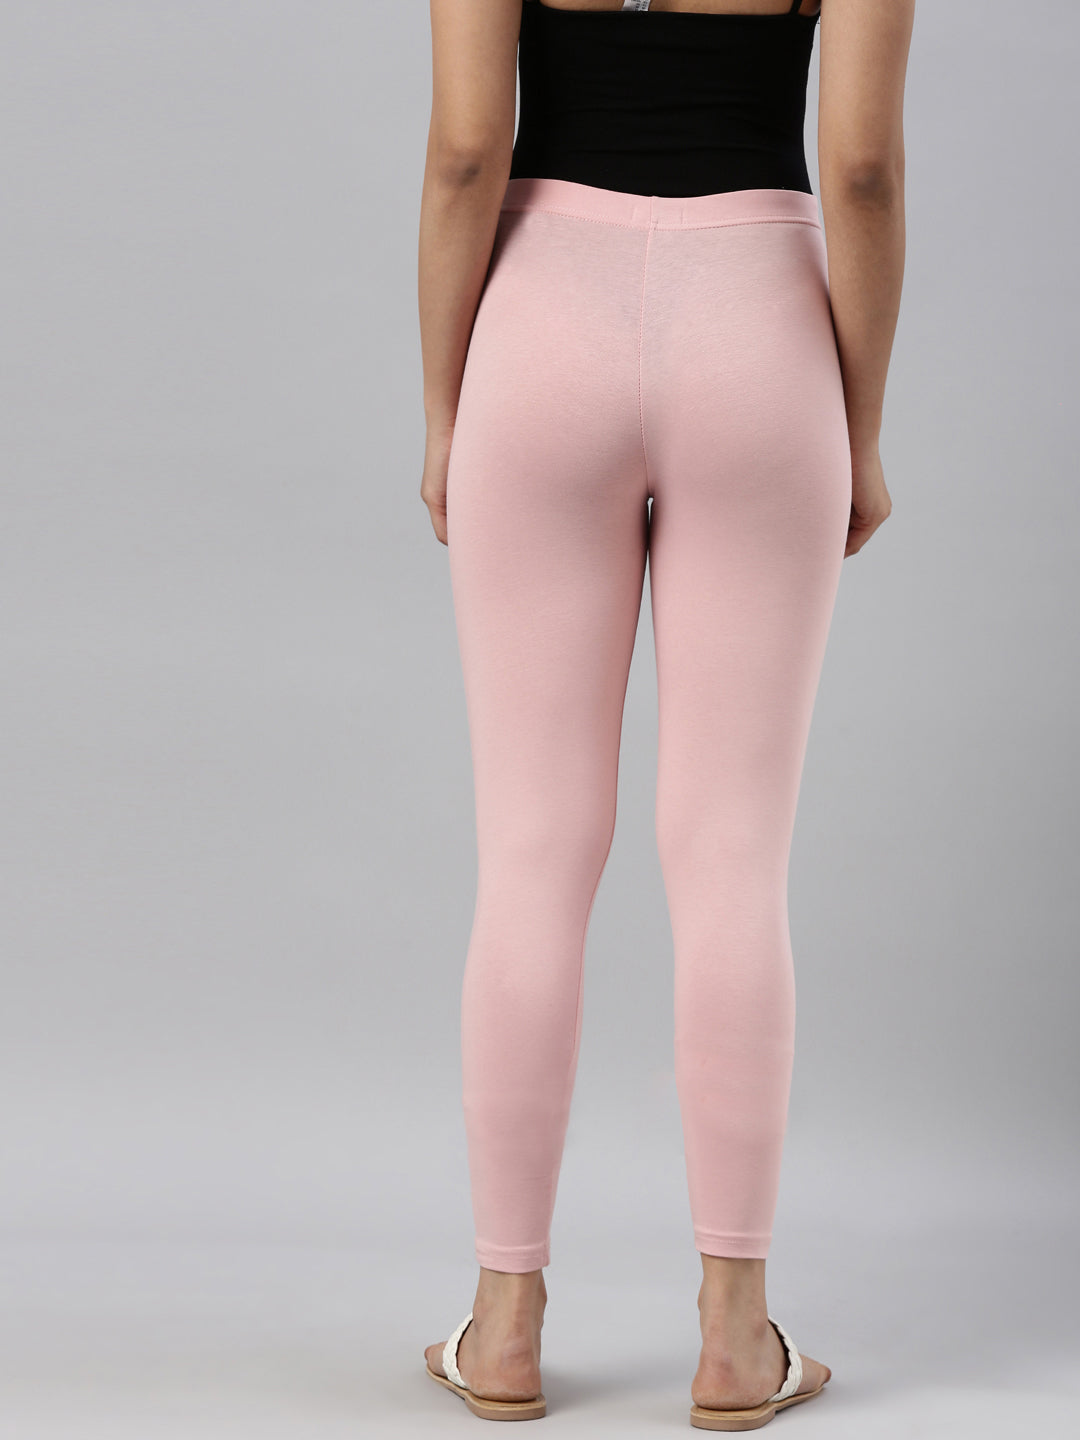 Buy Women Light Pink Solid Legging Online in India - Monte Carlo